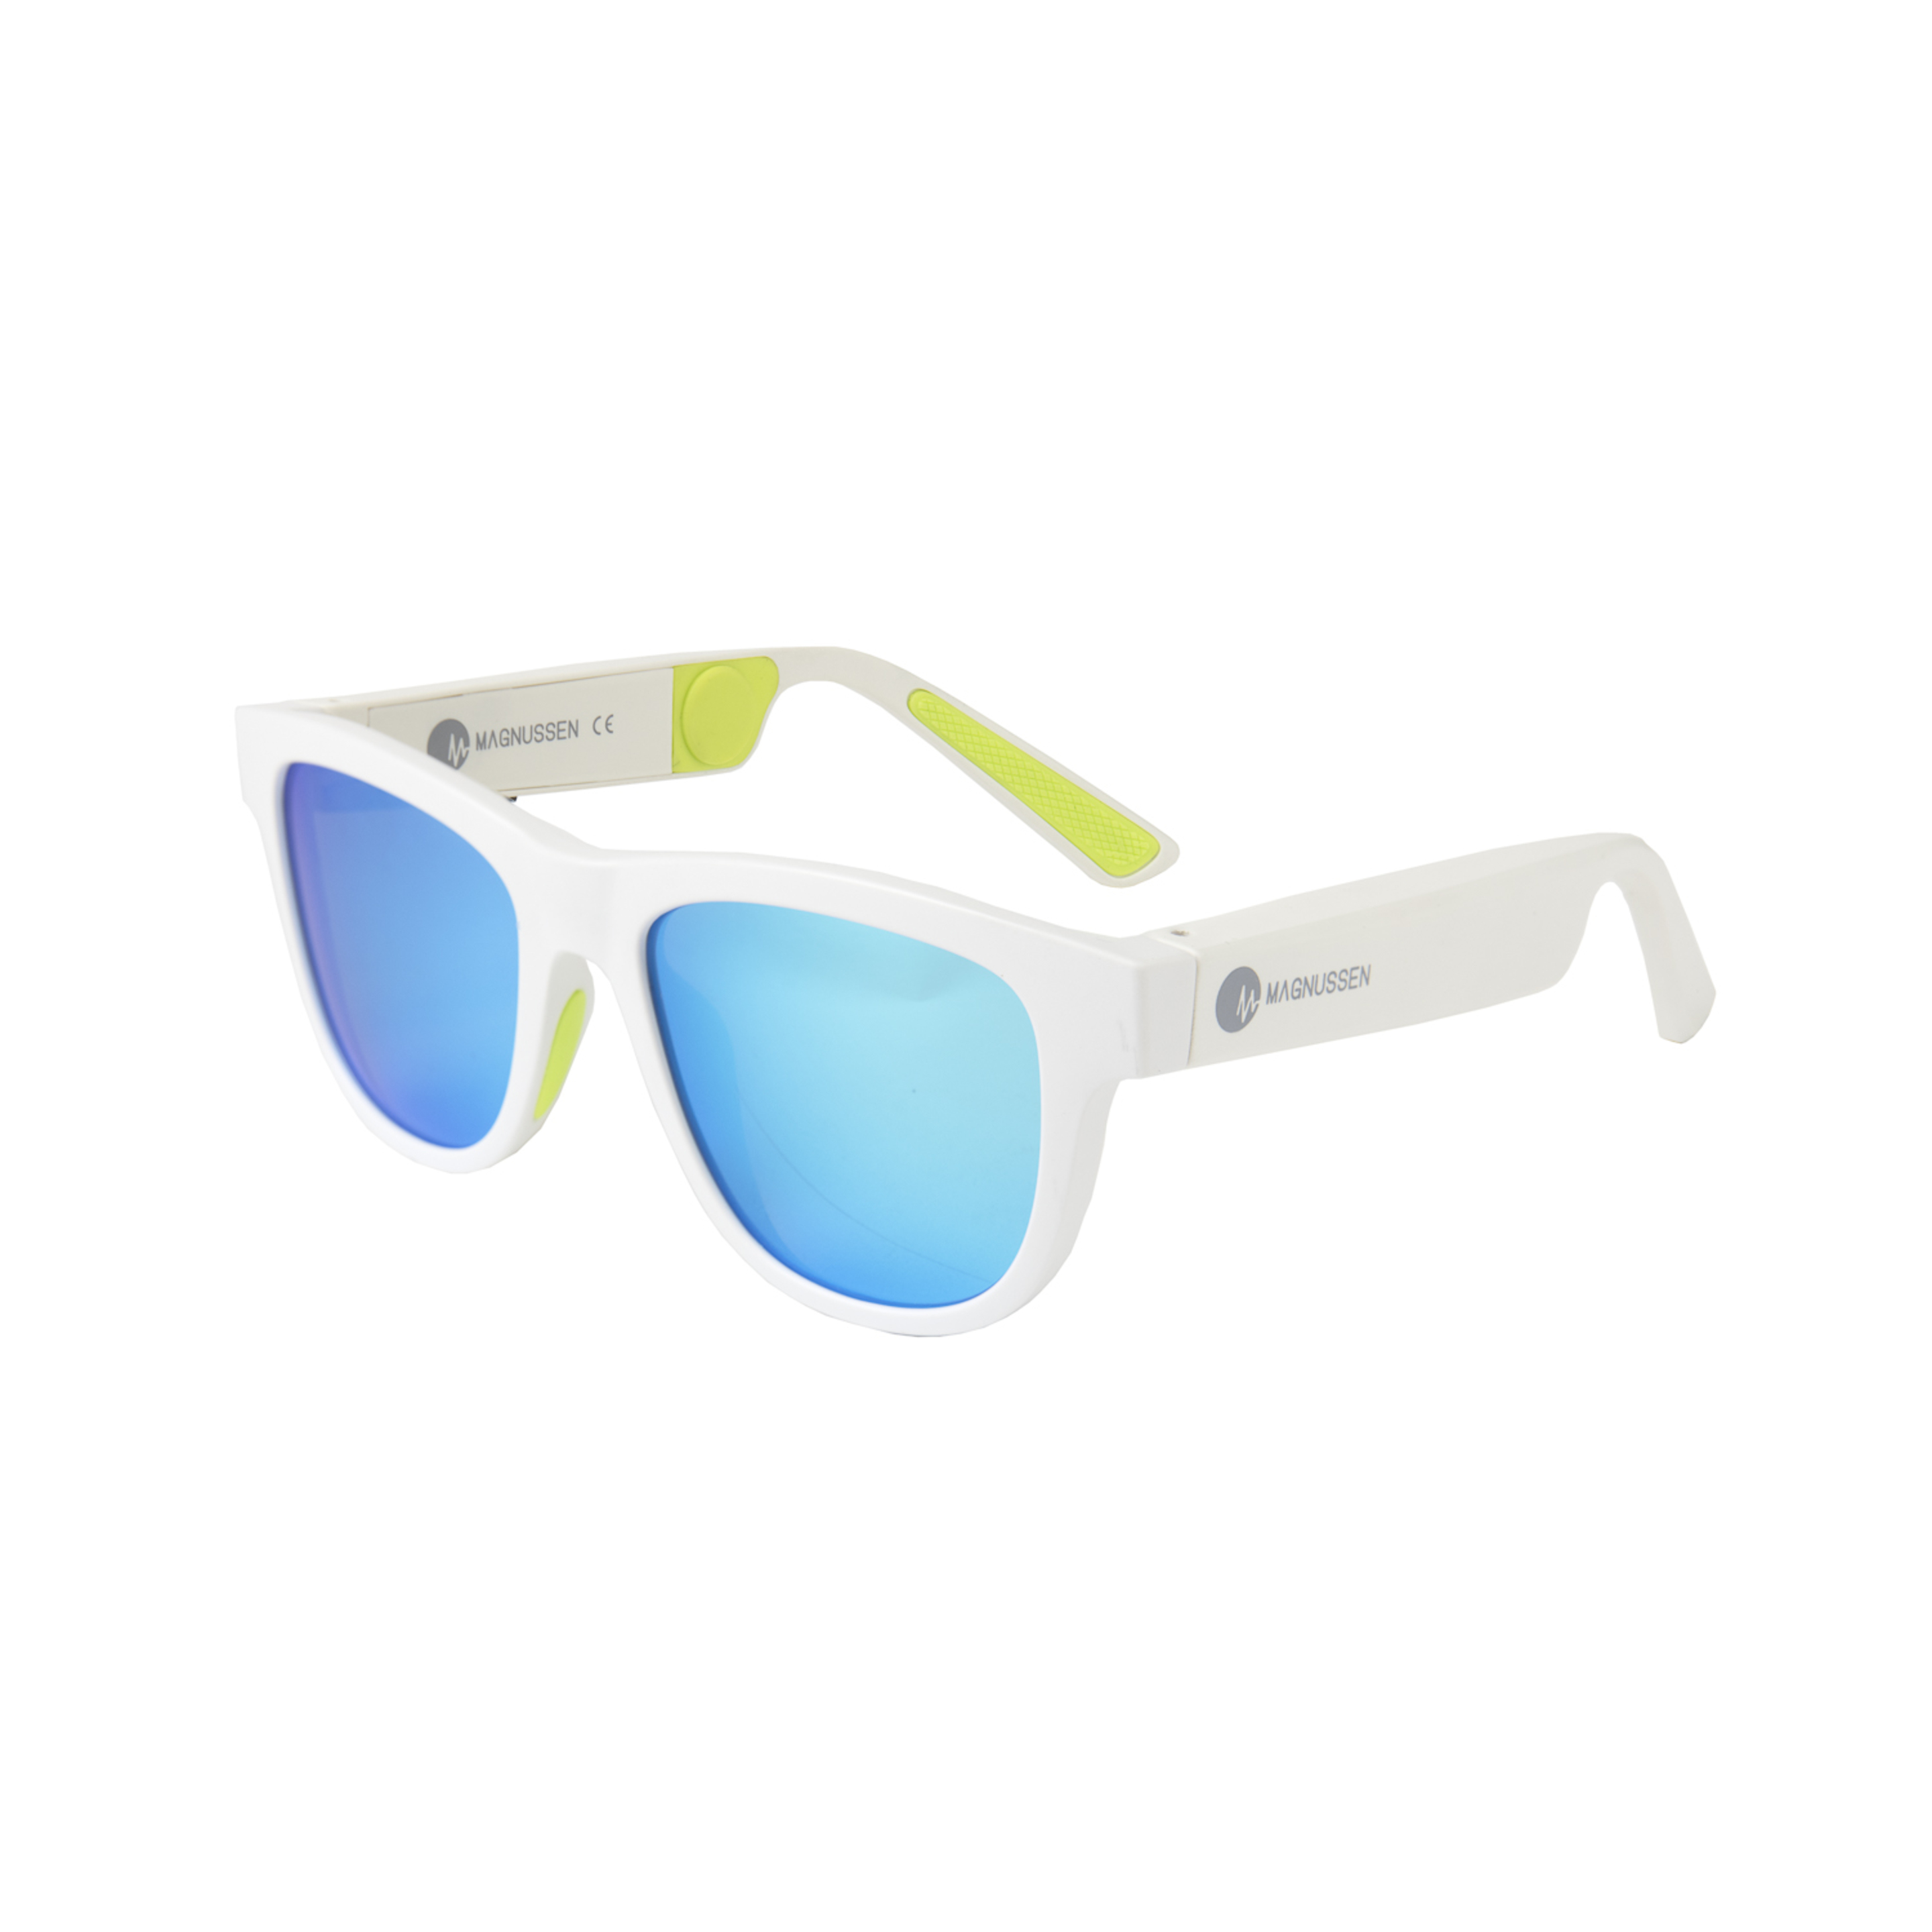 Gafas De Sol Magnussen G1 Bluetooth - Blanco/Azul  MKP